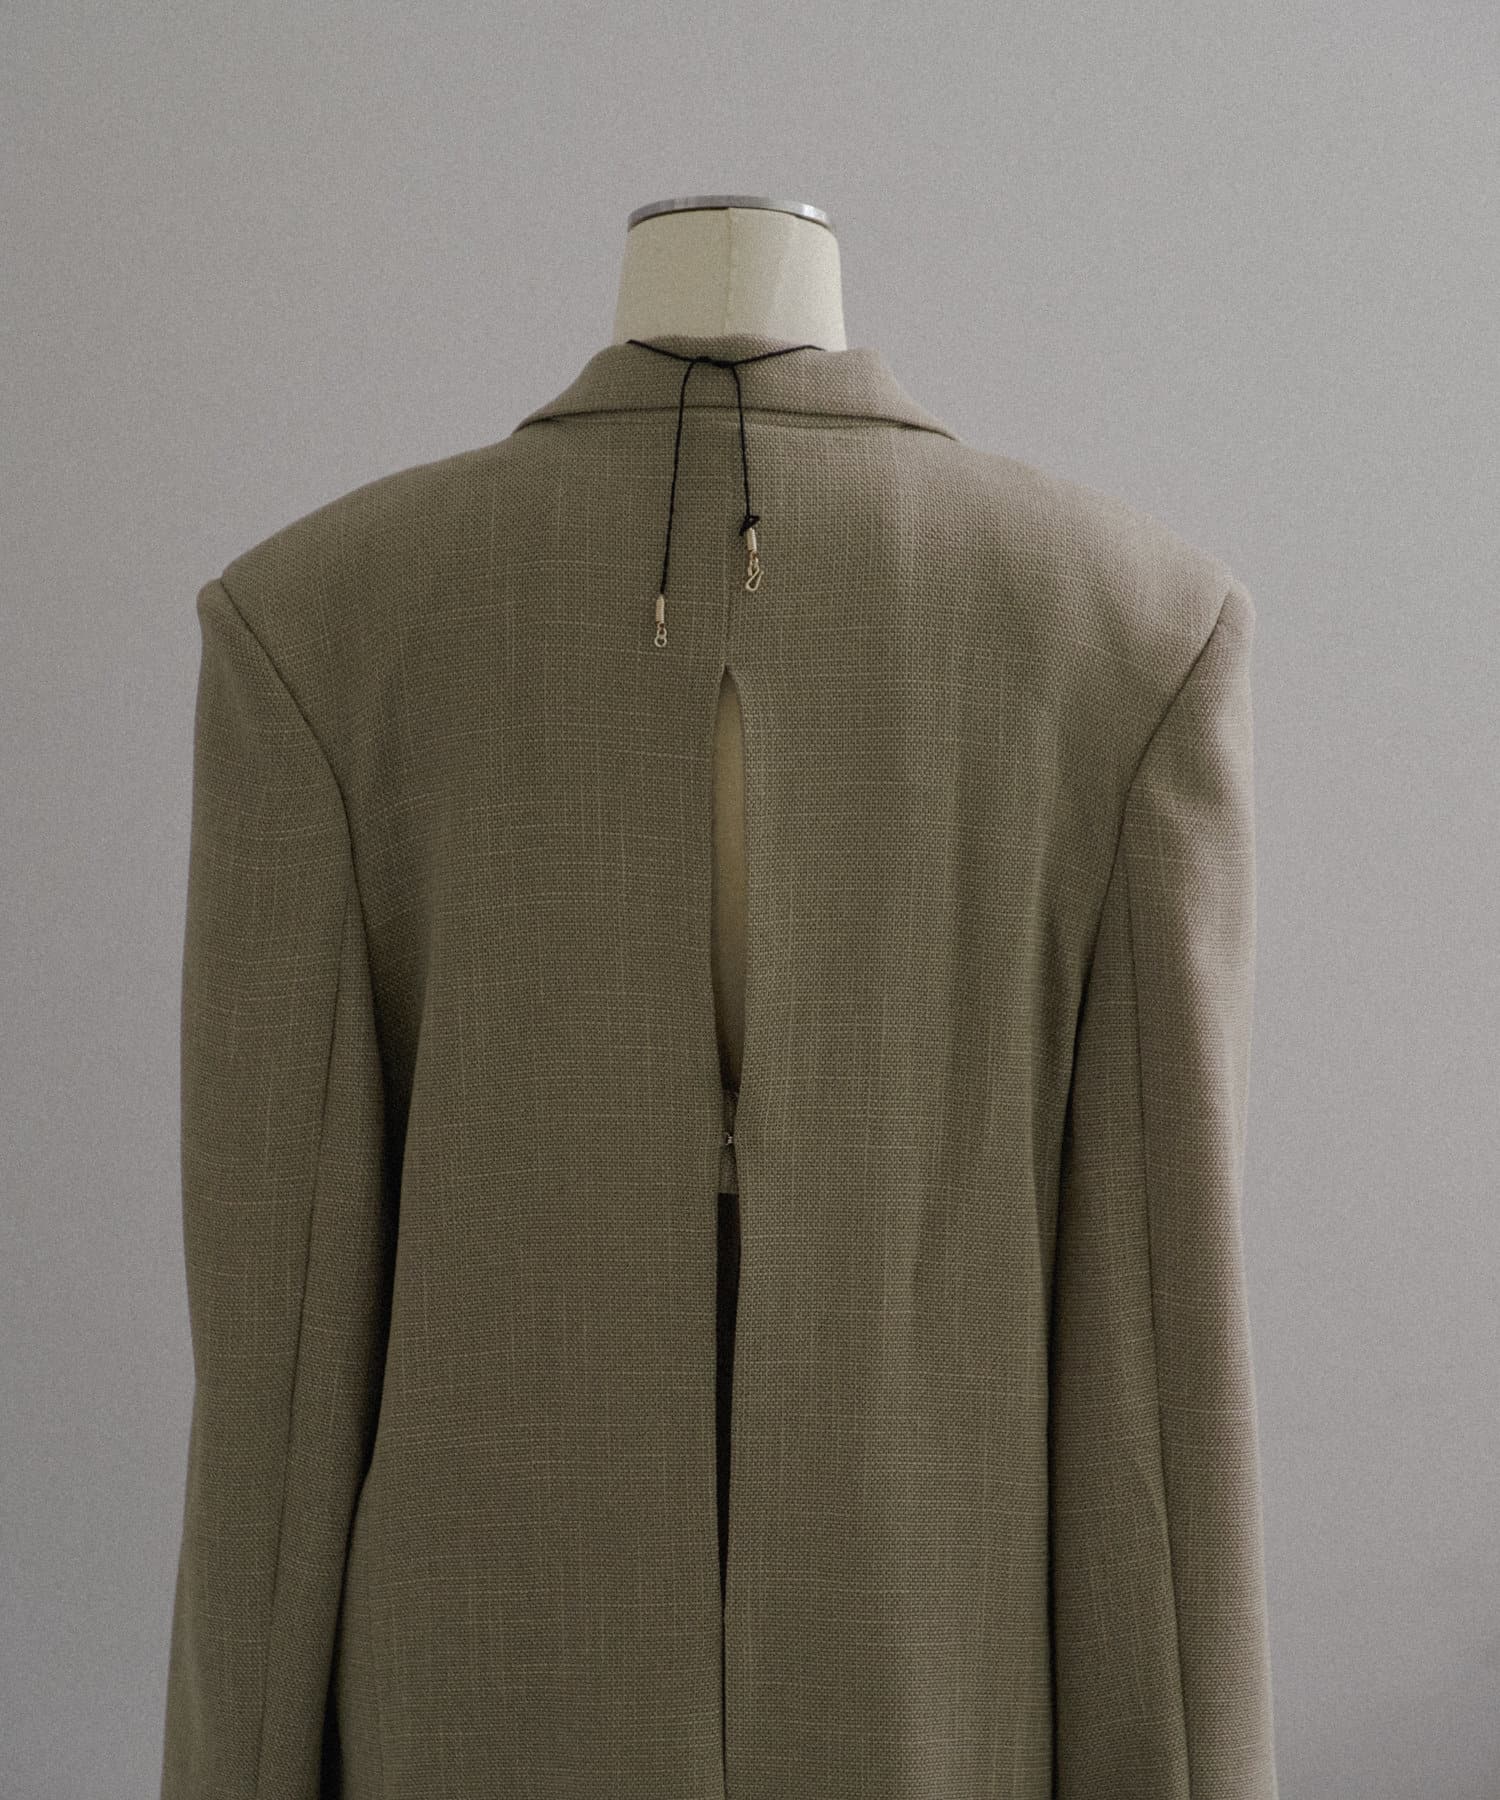 Pasterip(パセリ) KARAMI design jacket